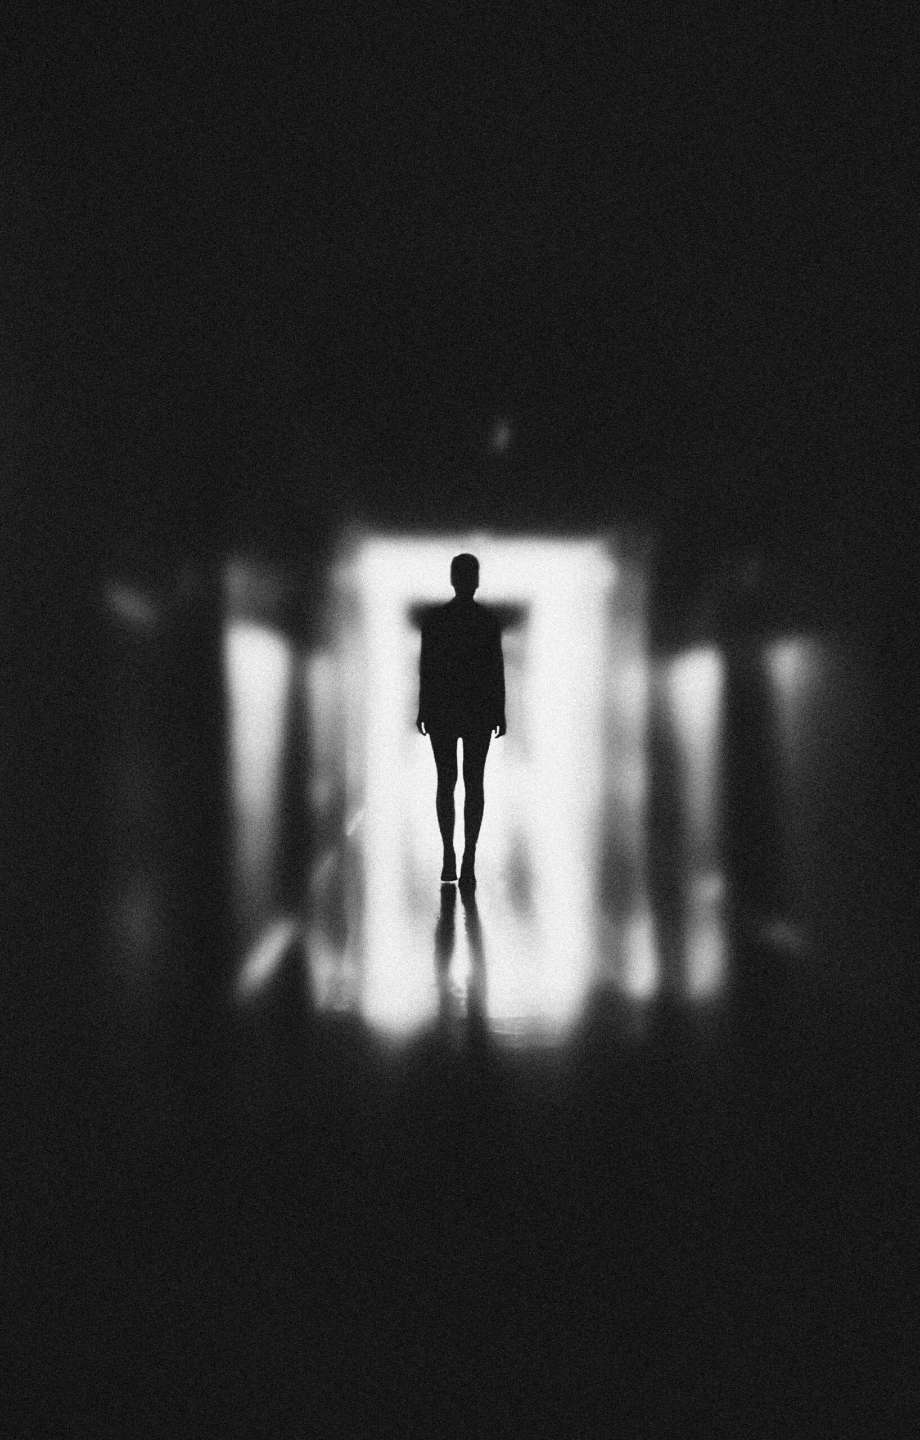 Silhouette of person in a dark hallway